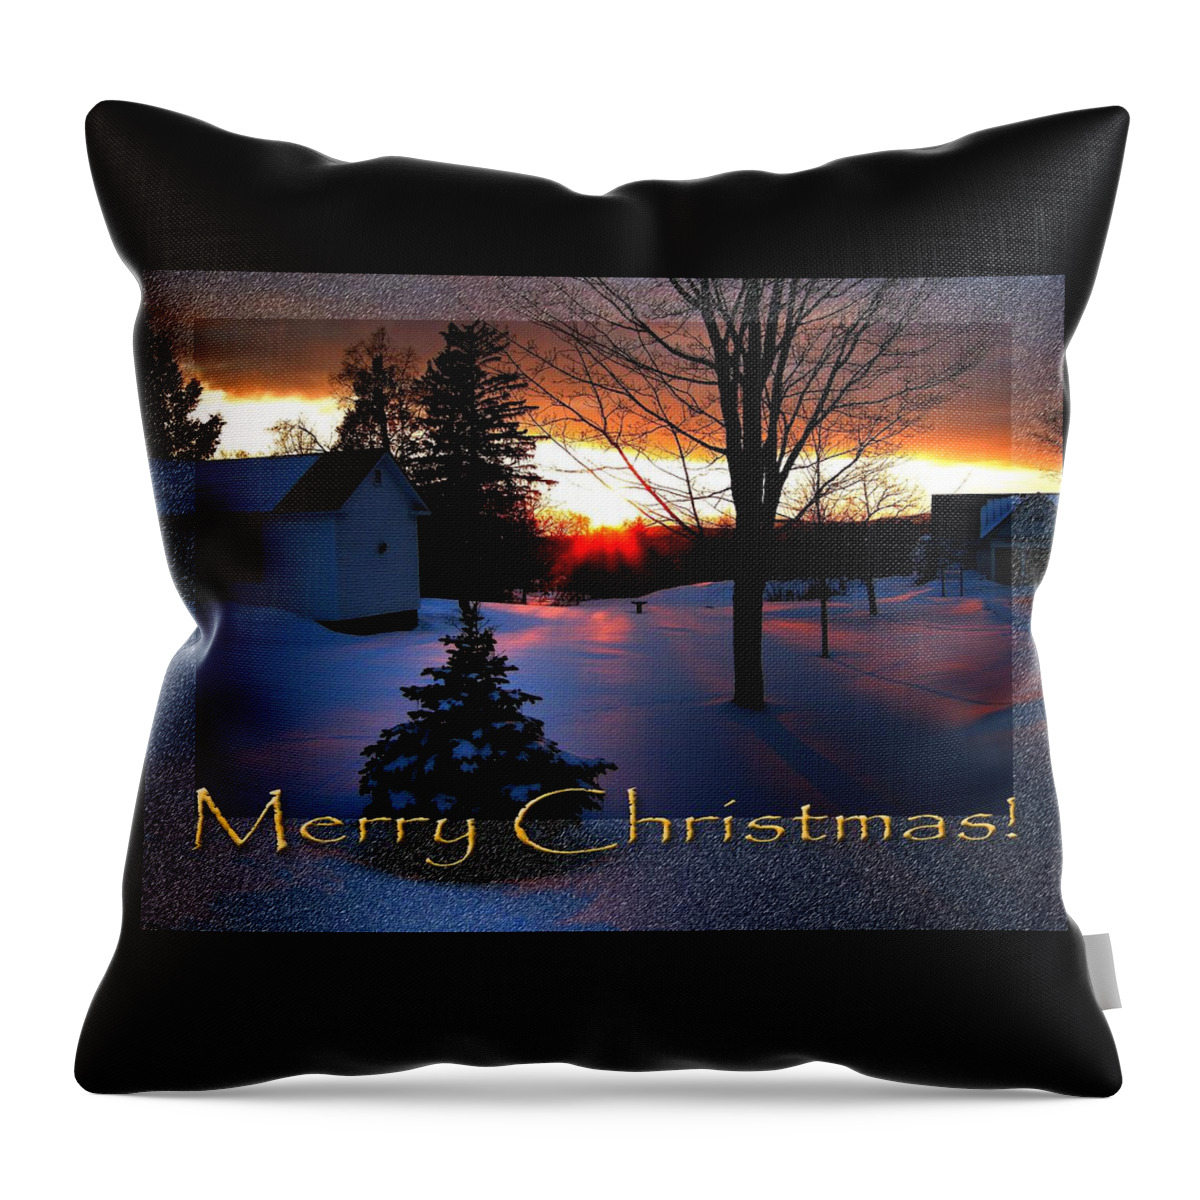 Merry Christmas Throw Pillow featuring the photograph Merry Christmas #1 by Savannah Gibbs